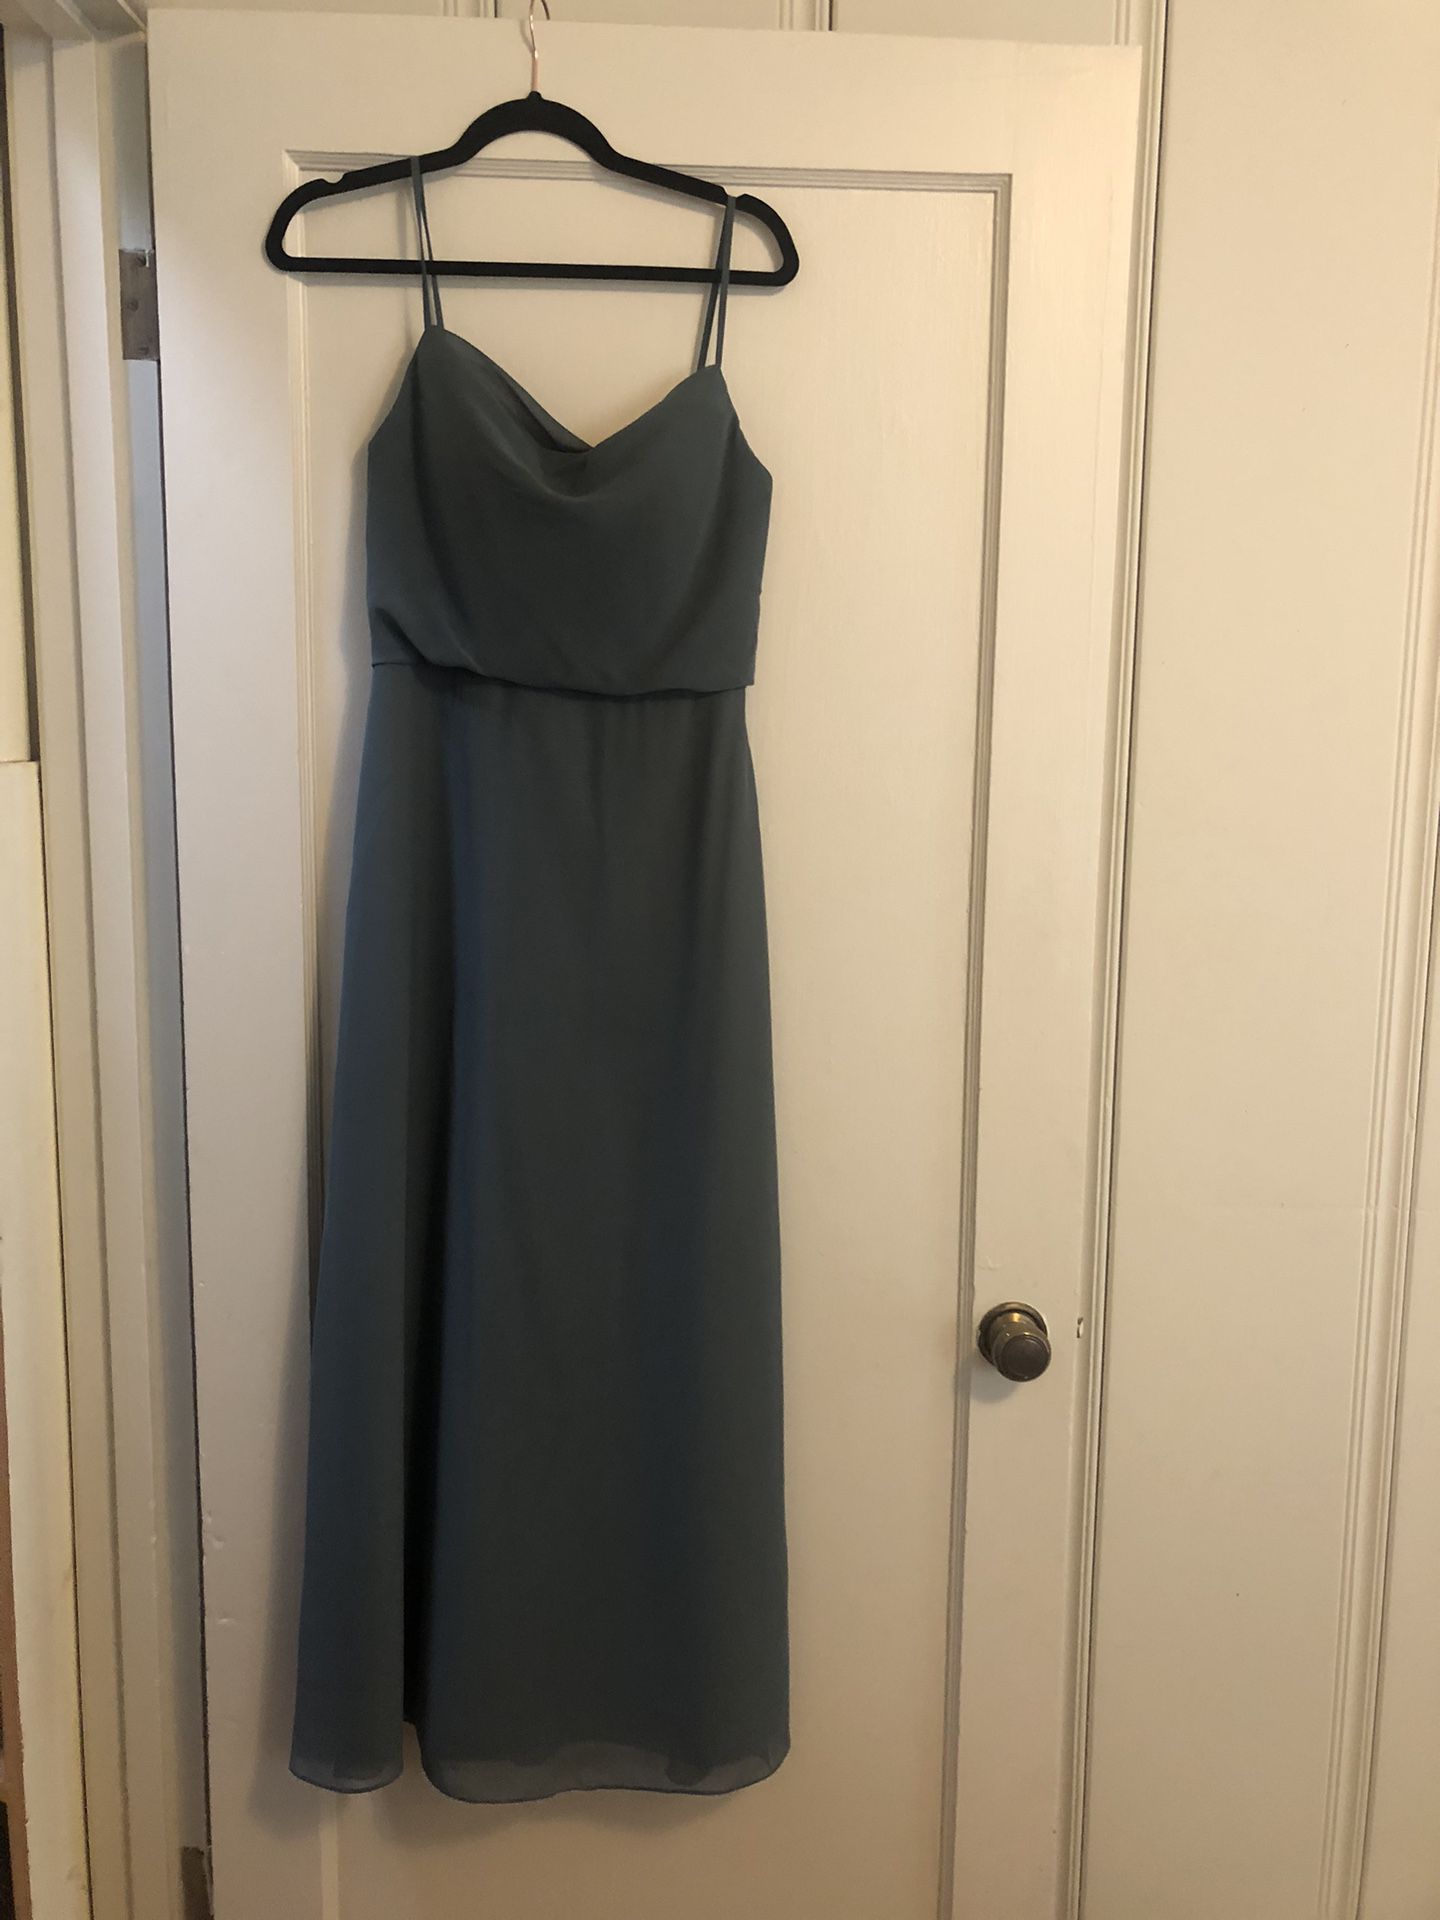 Revelry Brand Skye Dress - Size 2 (Eucalyptus)